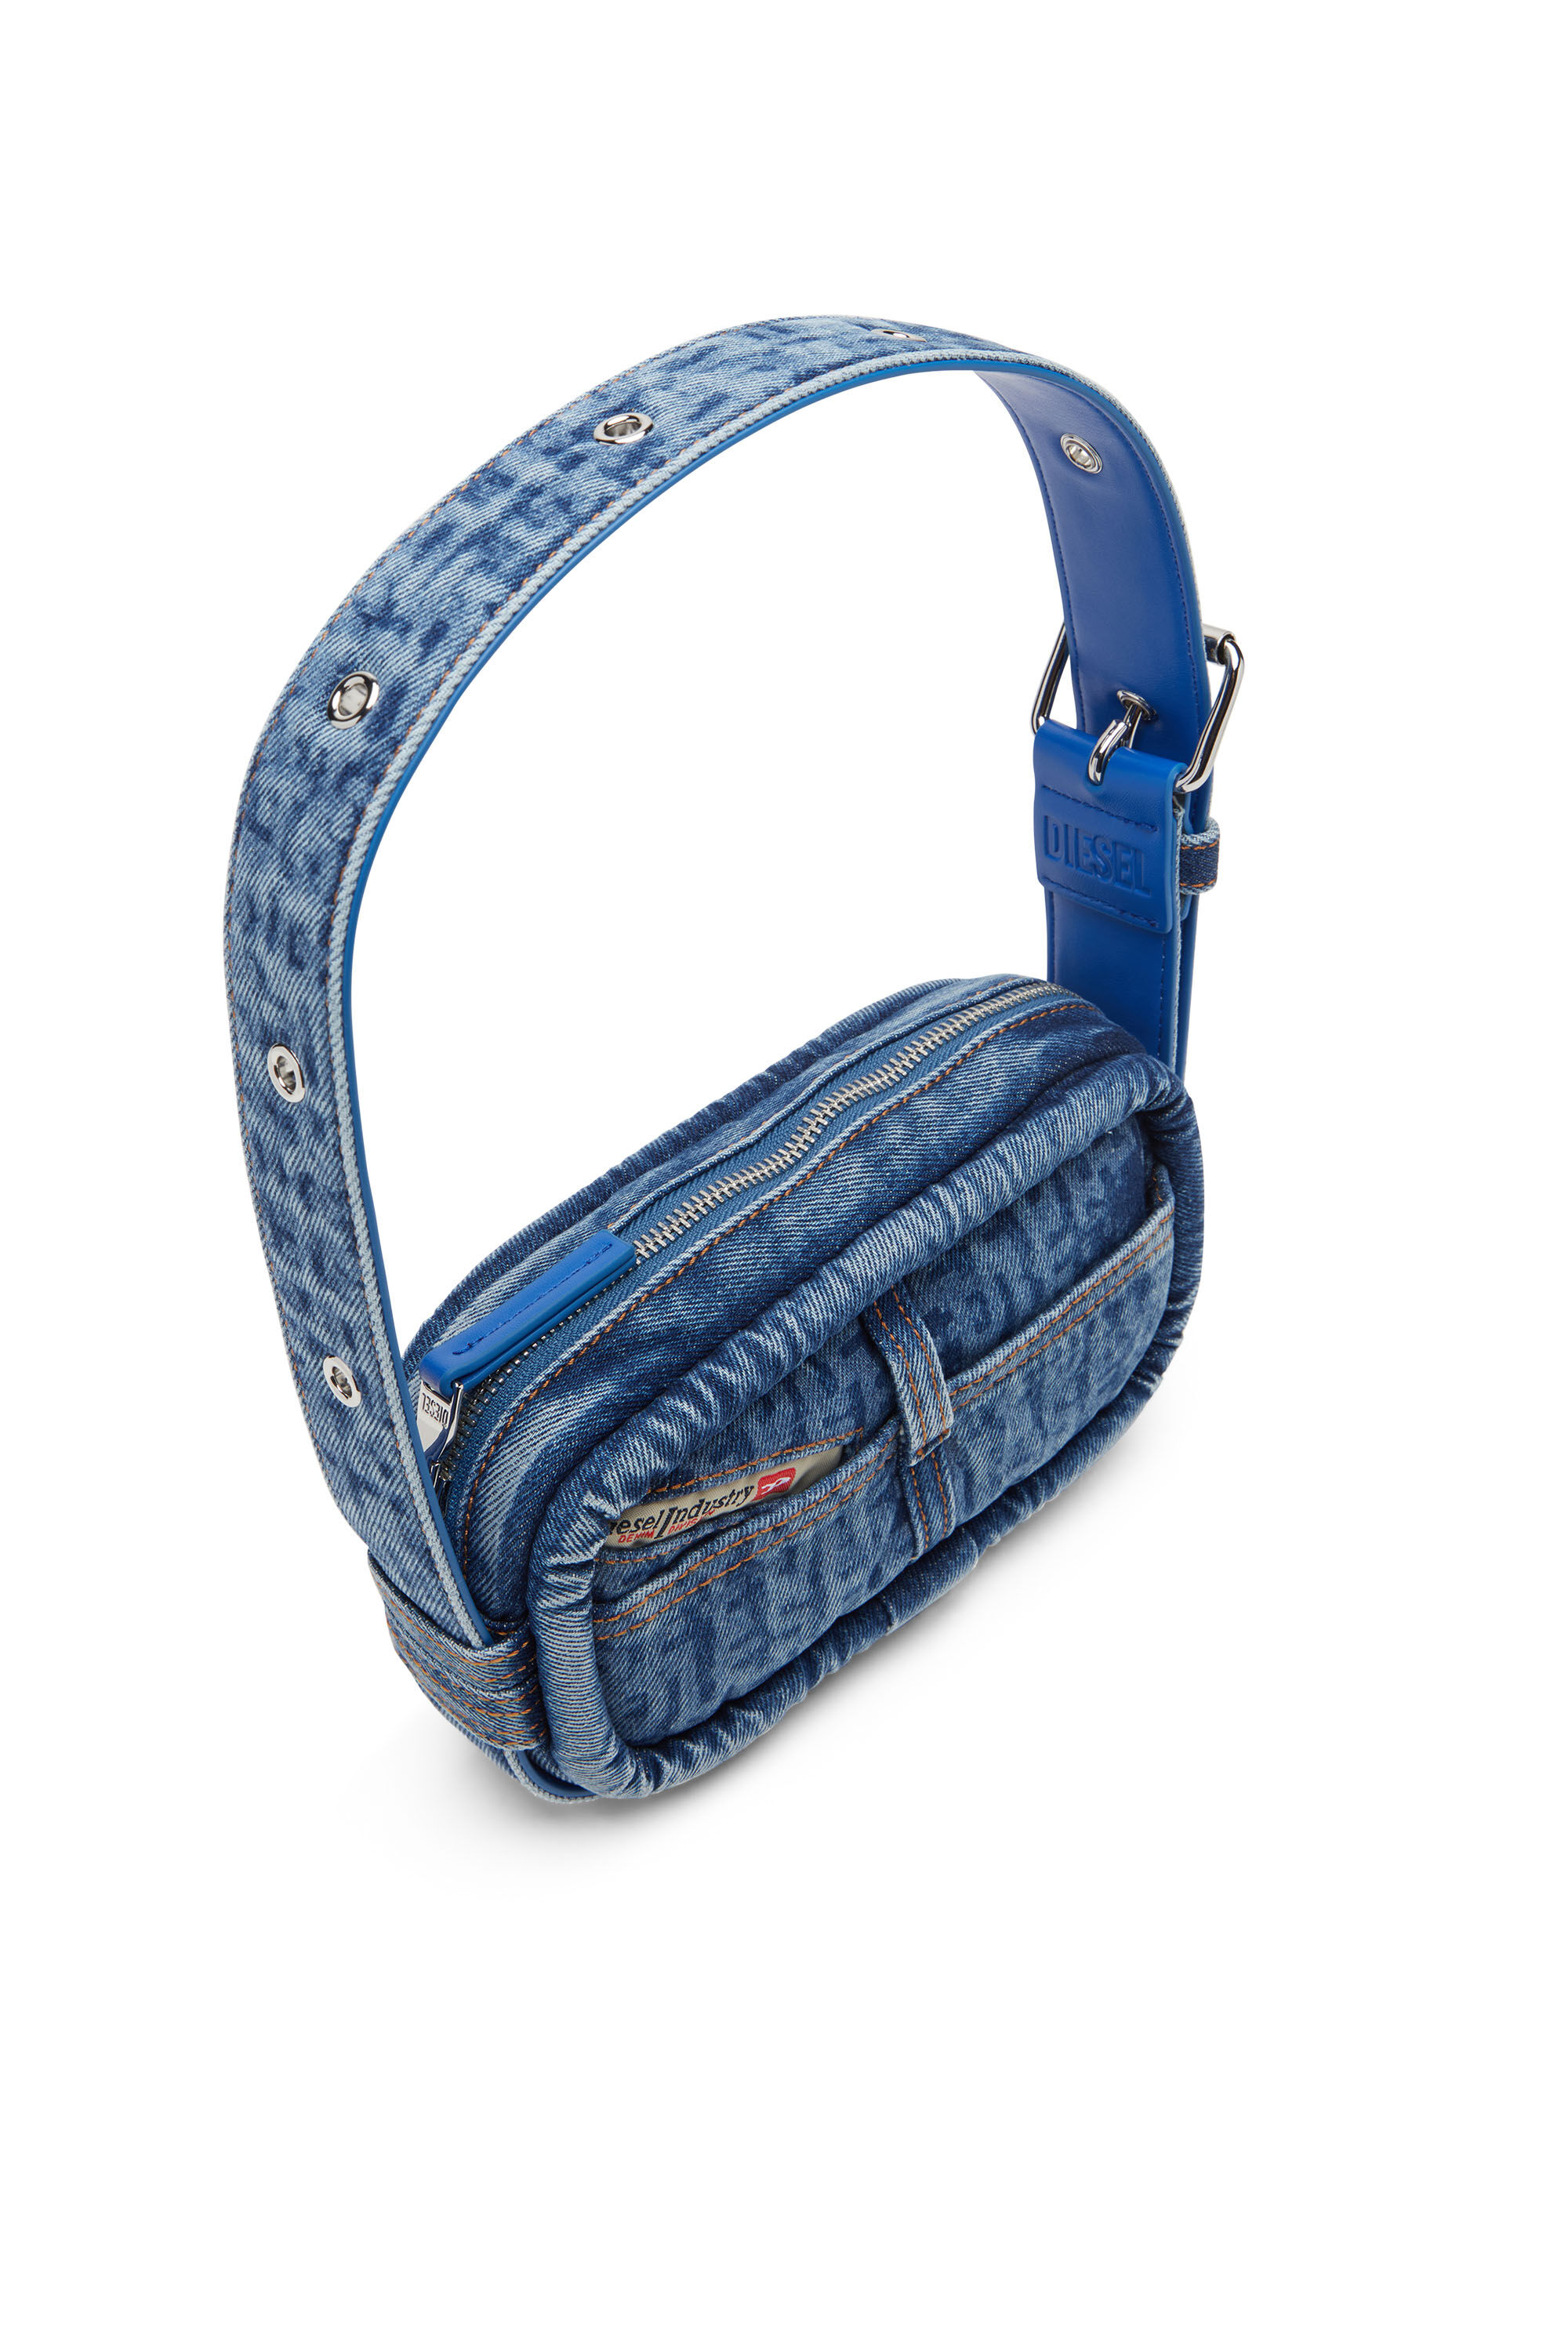 Louis Vuitton monogram stonewashed denim blue bum bag Body Bags Waist Bags  used